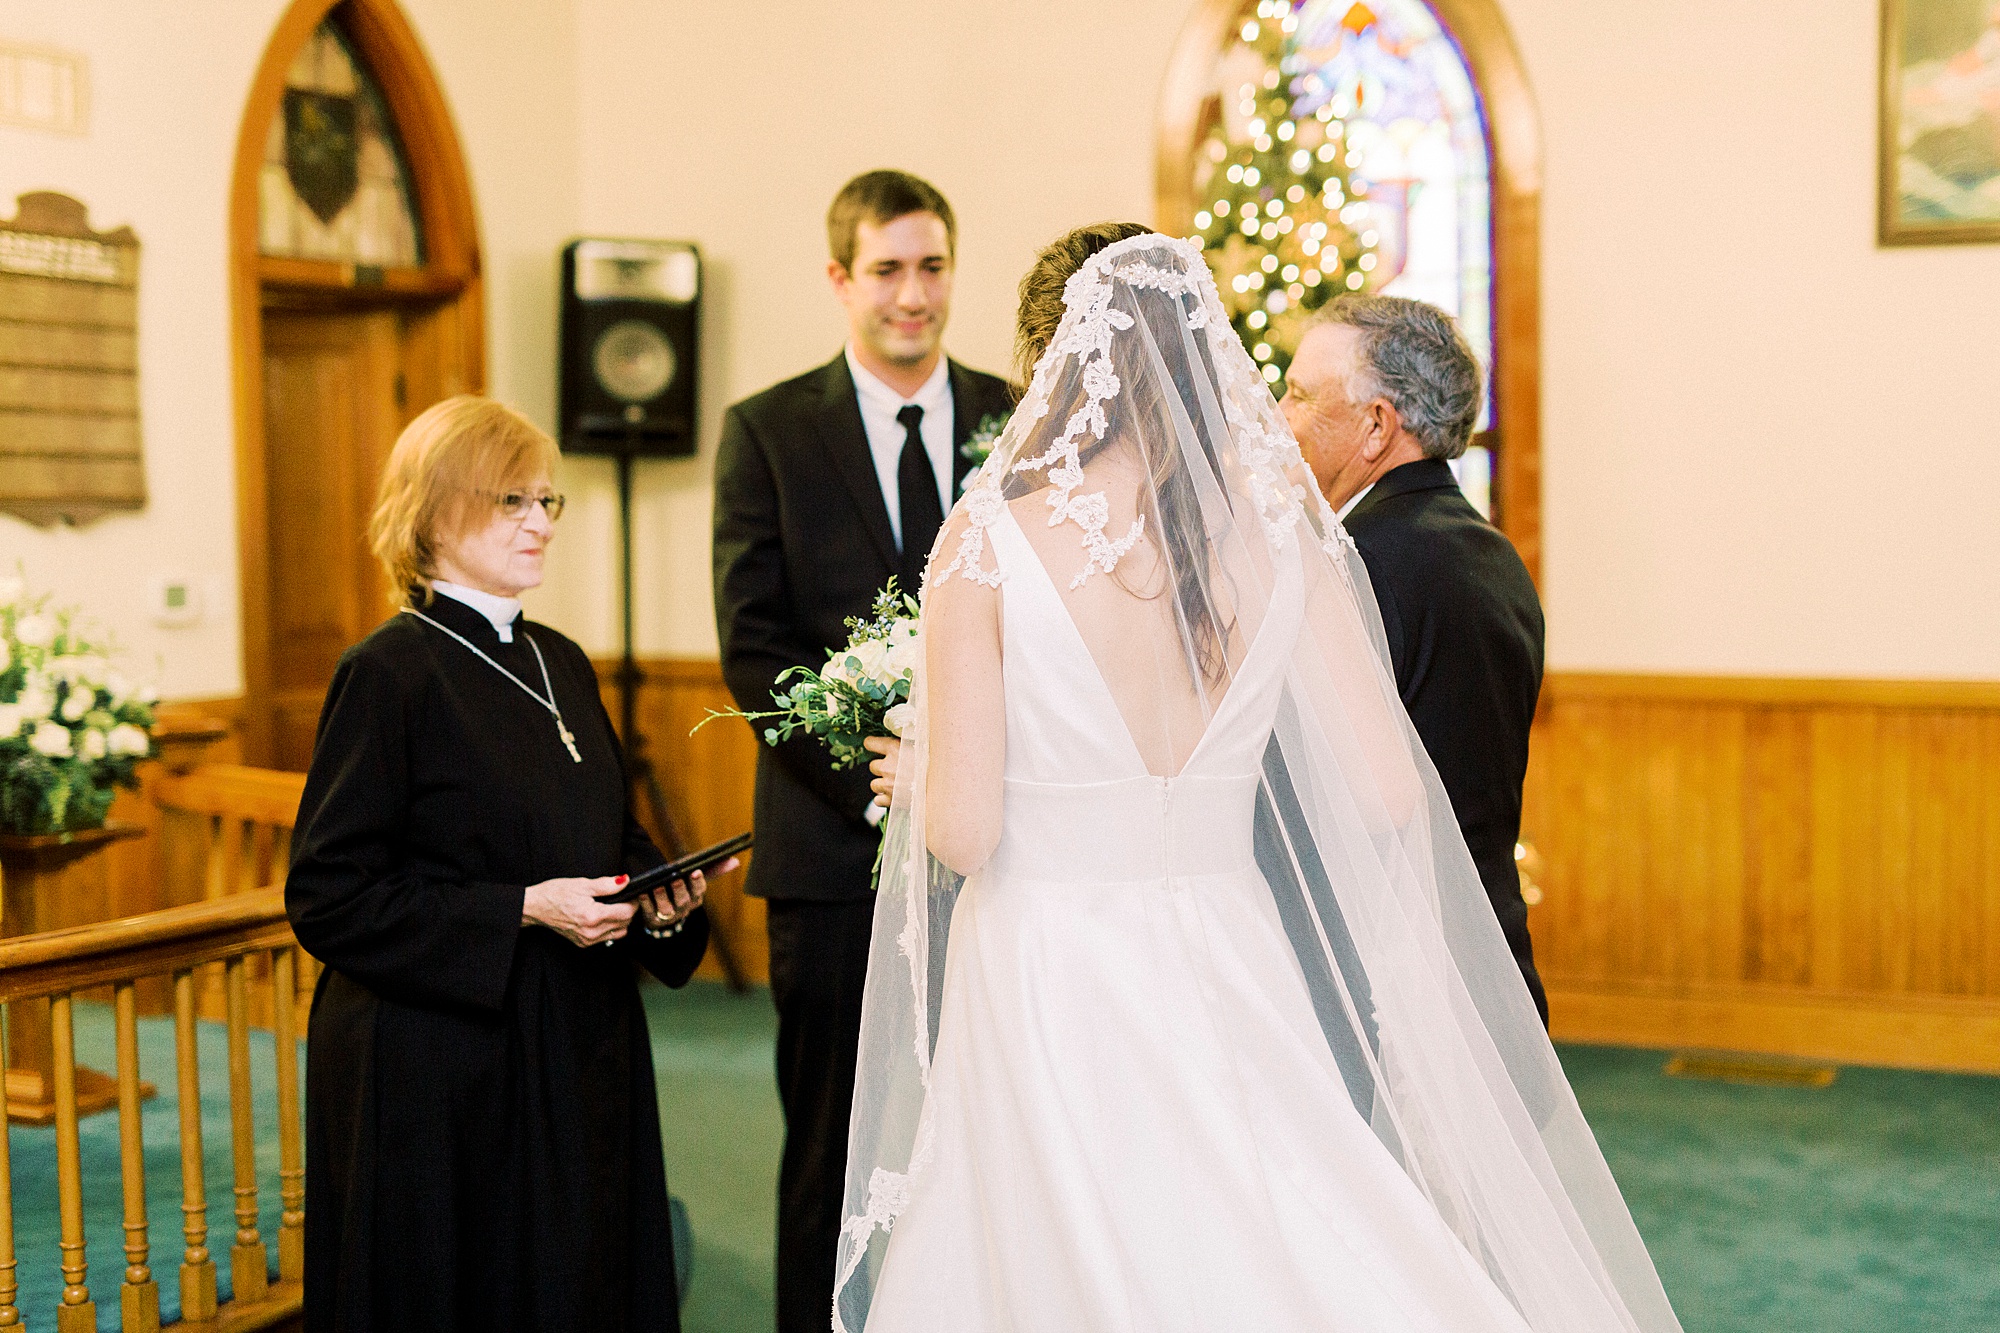 newlyweds exchange vows during intimate church wedding at Bethesda United Methodist Church